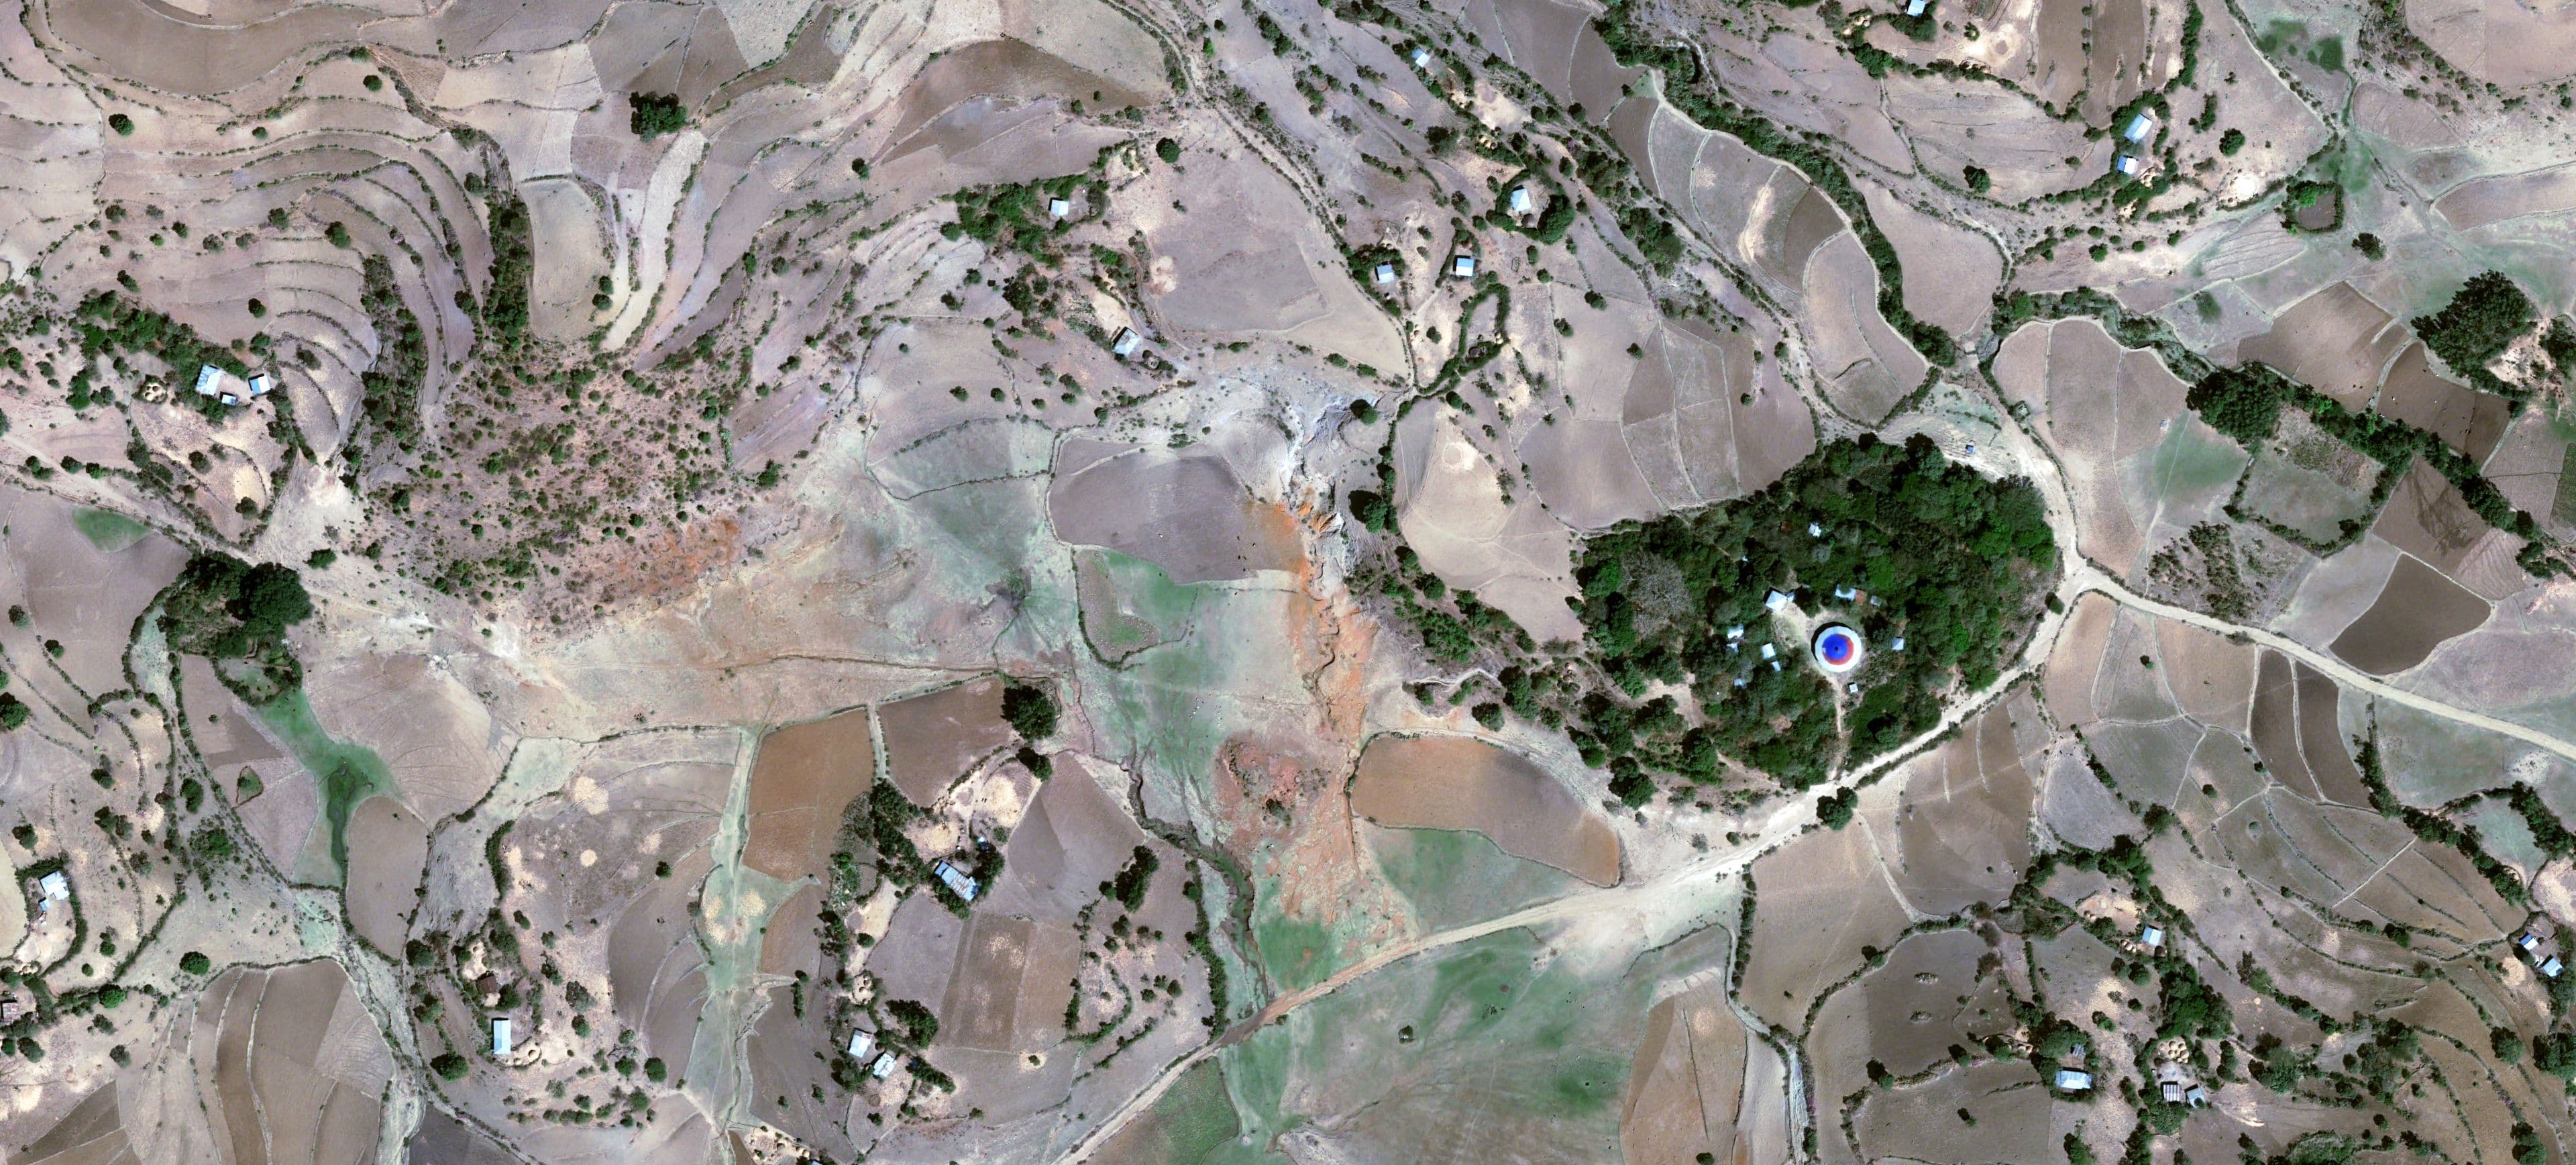 Amara, Ethiopia, very high quality satellite imagery - Pléiades Neo 30cm resolution